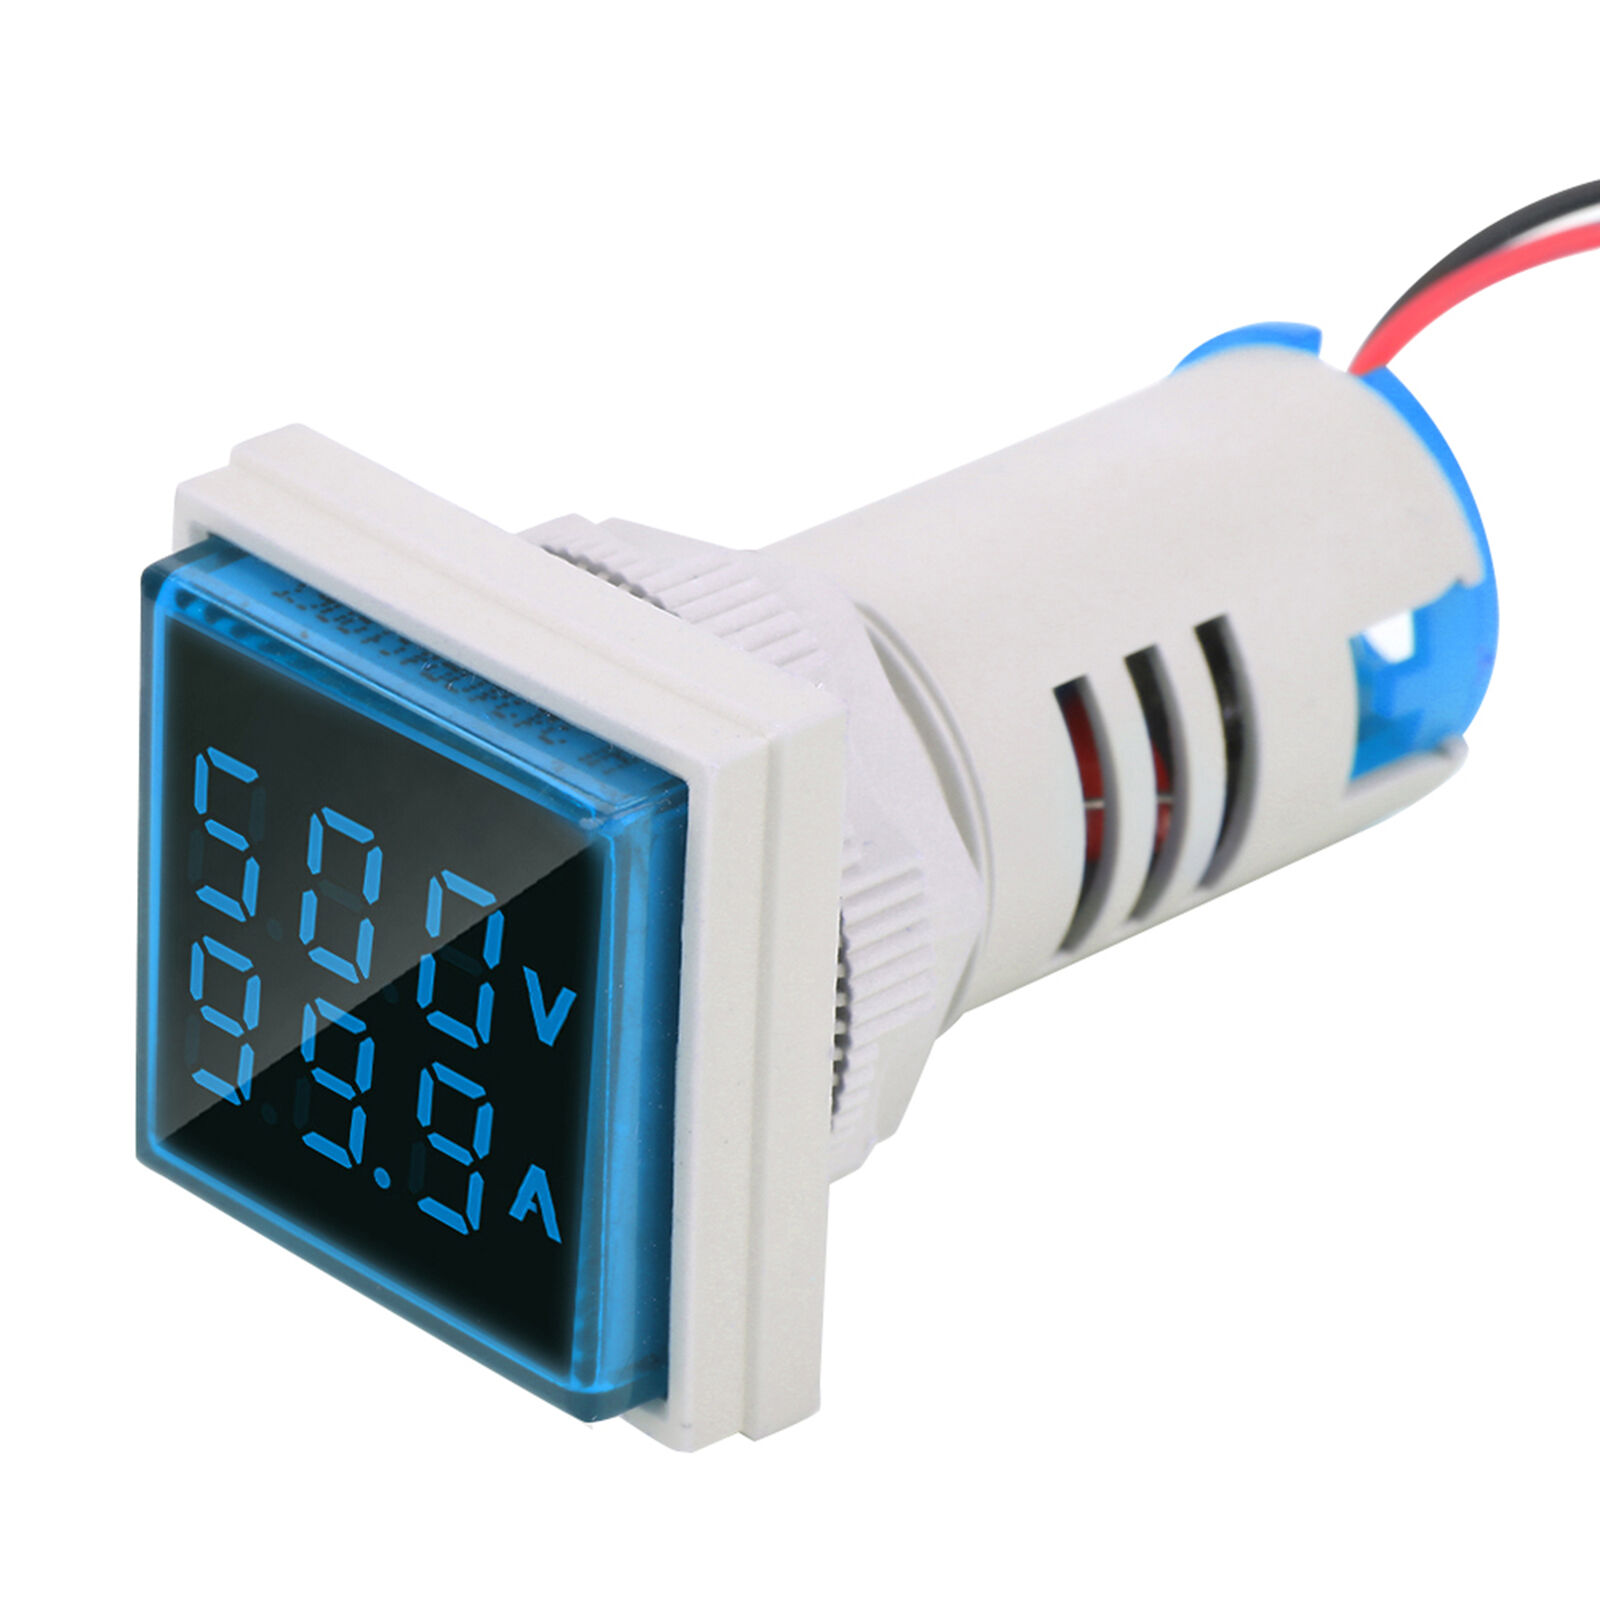 LED Display Voltmeter 0-100A Meter Indicator For AC Voltage 